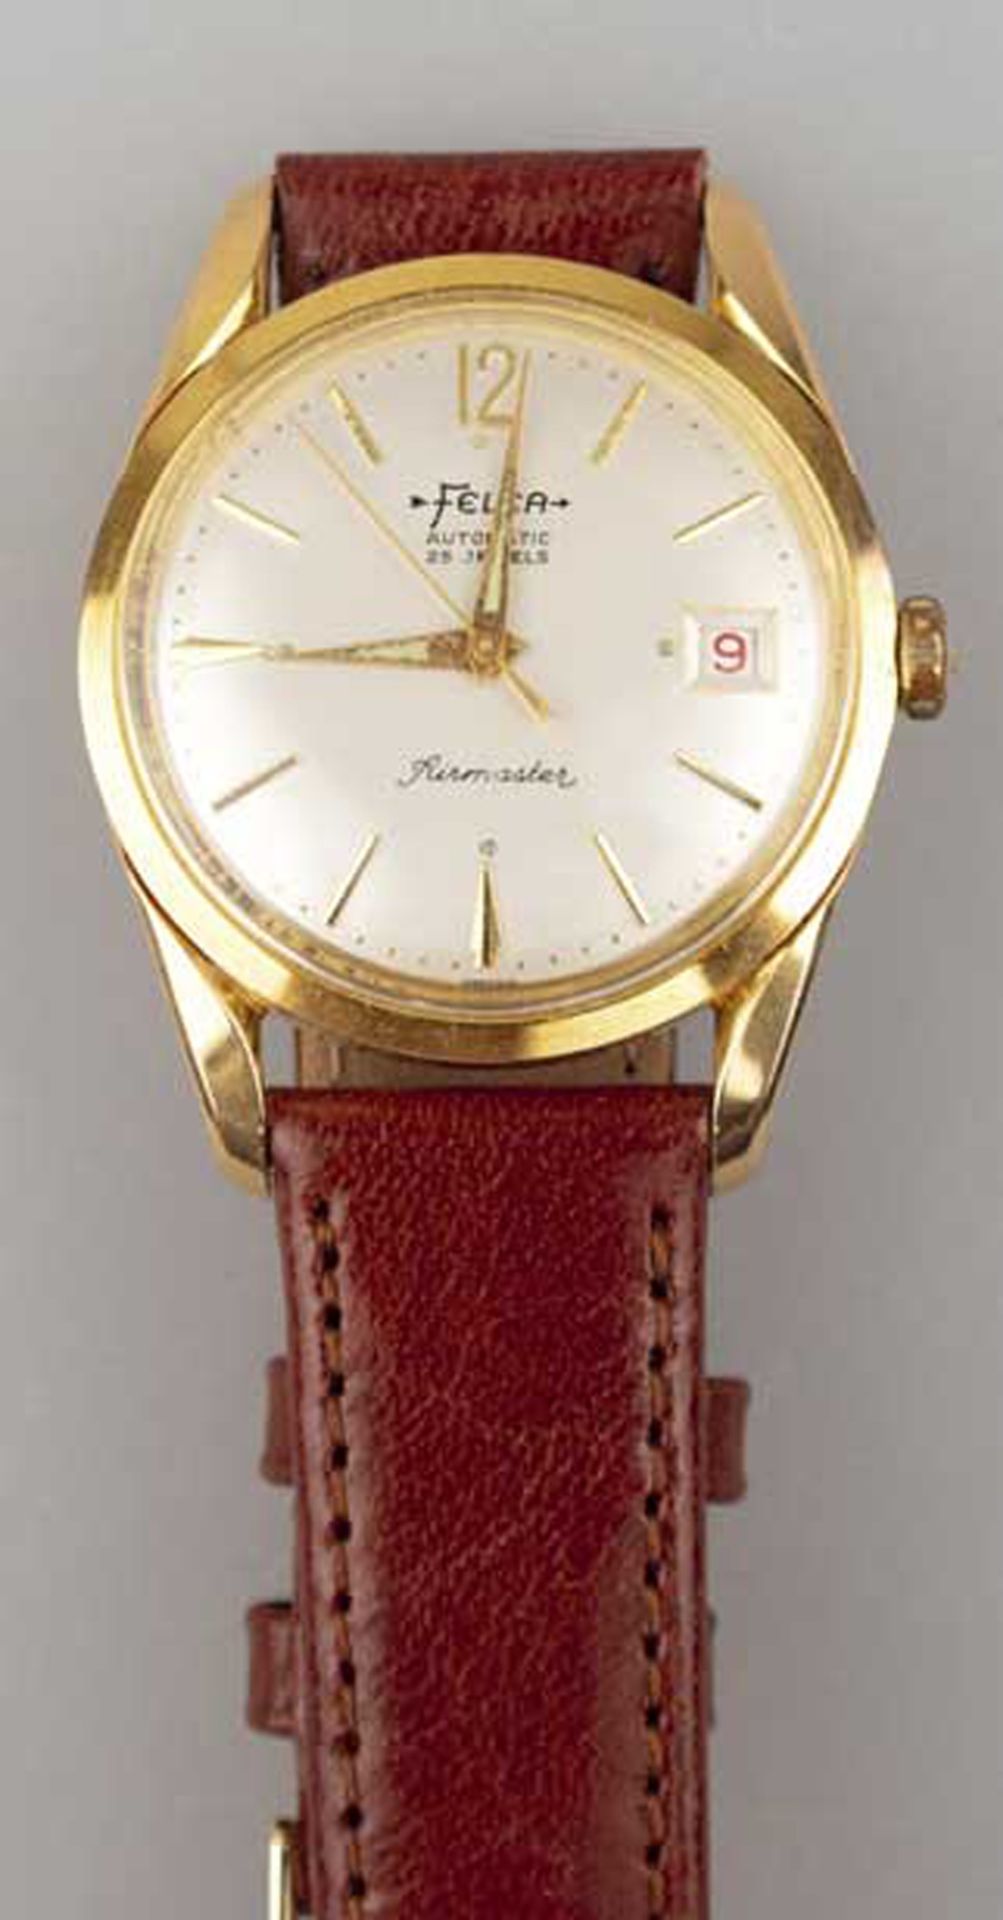 Herren-Armbanduhr "Felca Airmaster", Automatic, perlmuttfarbenes Zifferblatt, Dm. 3,0 cm, mit vergo